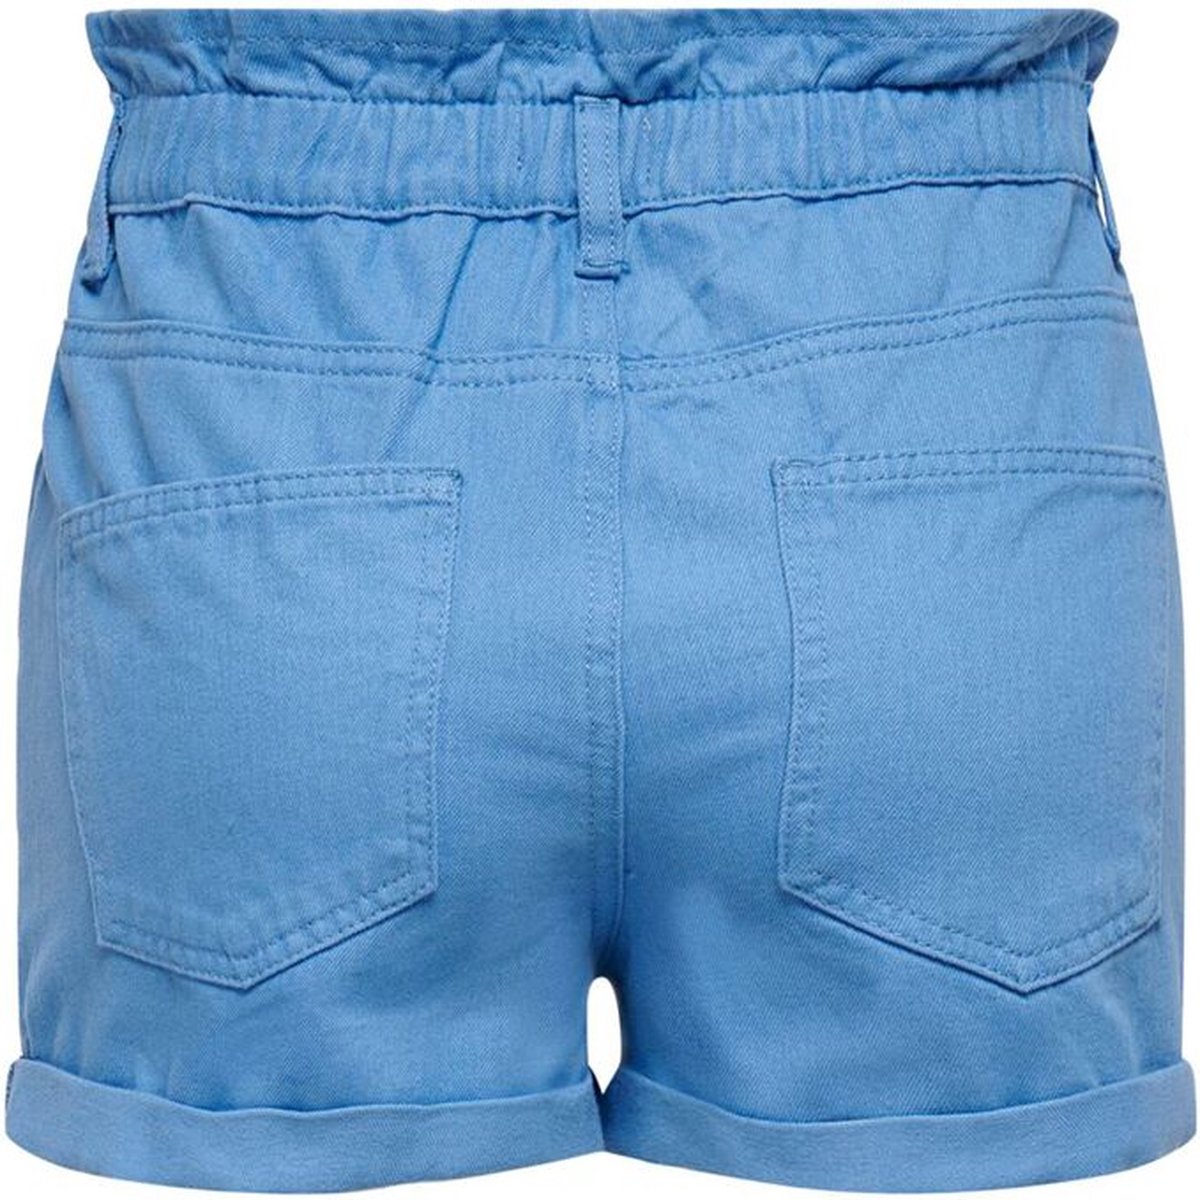 Remade paperbag jean jeans shorts Kleding Gender-neutrale kleding volwassenen Shorts 